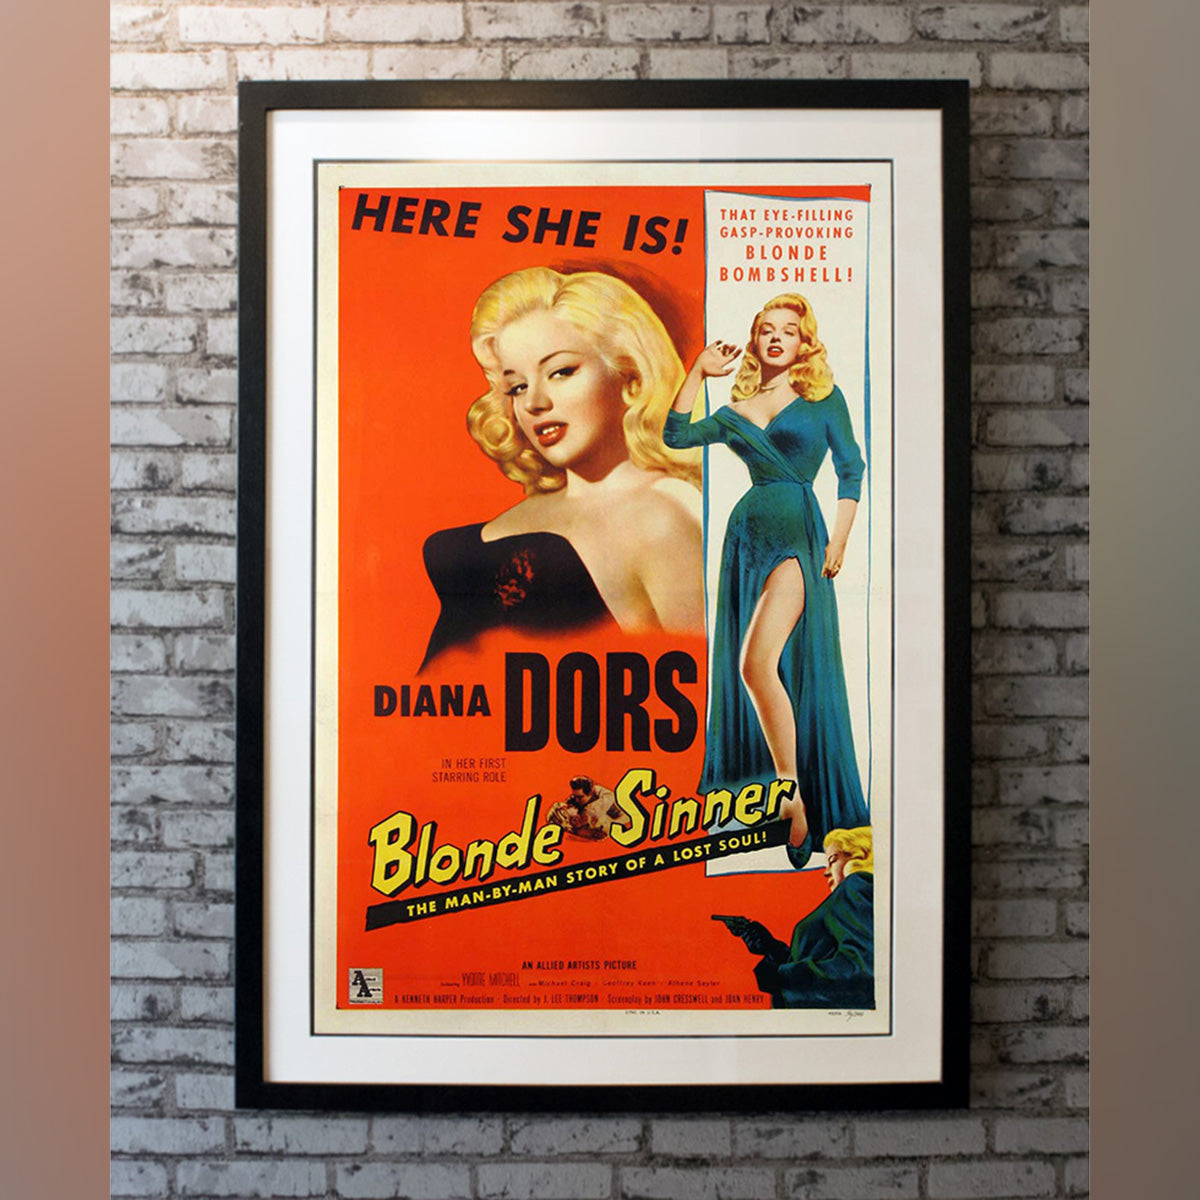 Original Movie Poster of Blonde Sinner (1956)